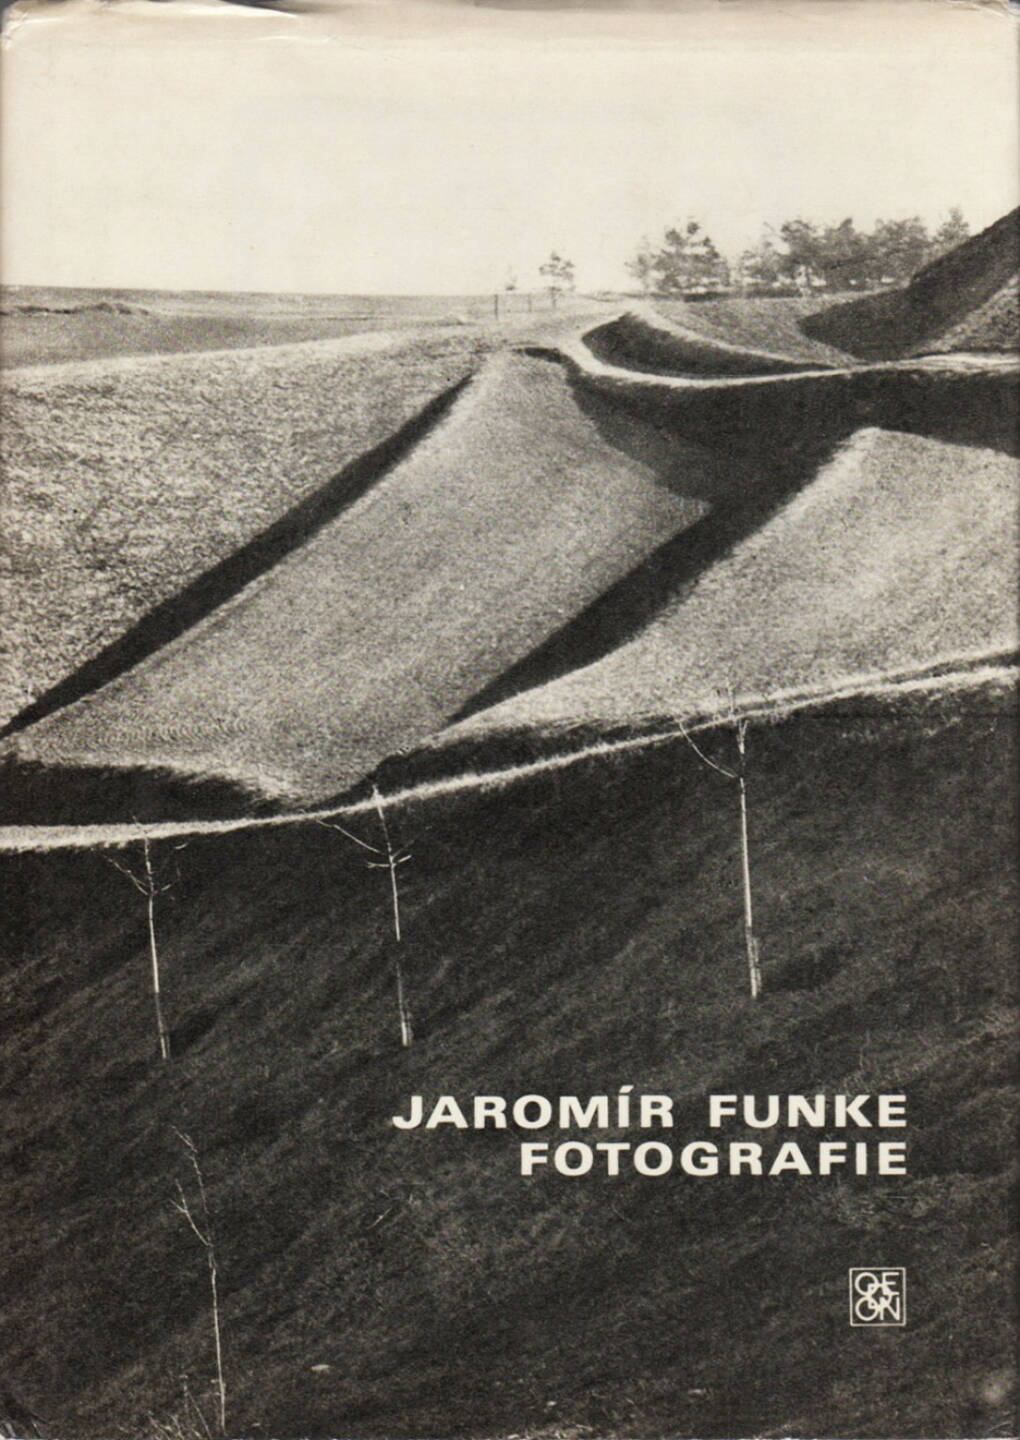 Jaromir Funke - Fotografie, Odeon 1970, Cover - http://josefchladek.com/book/jaromir_funke_-_fotografie